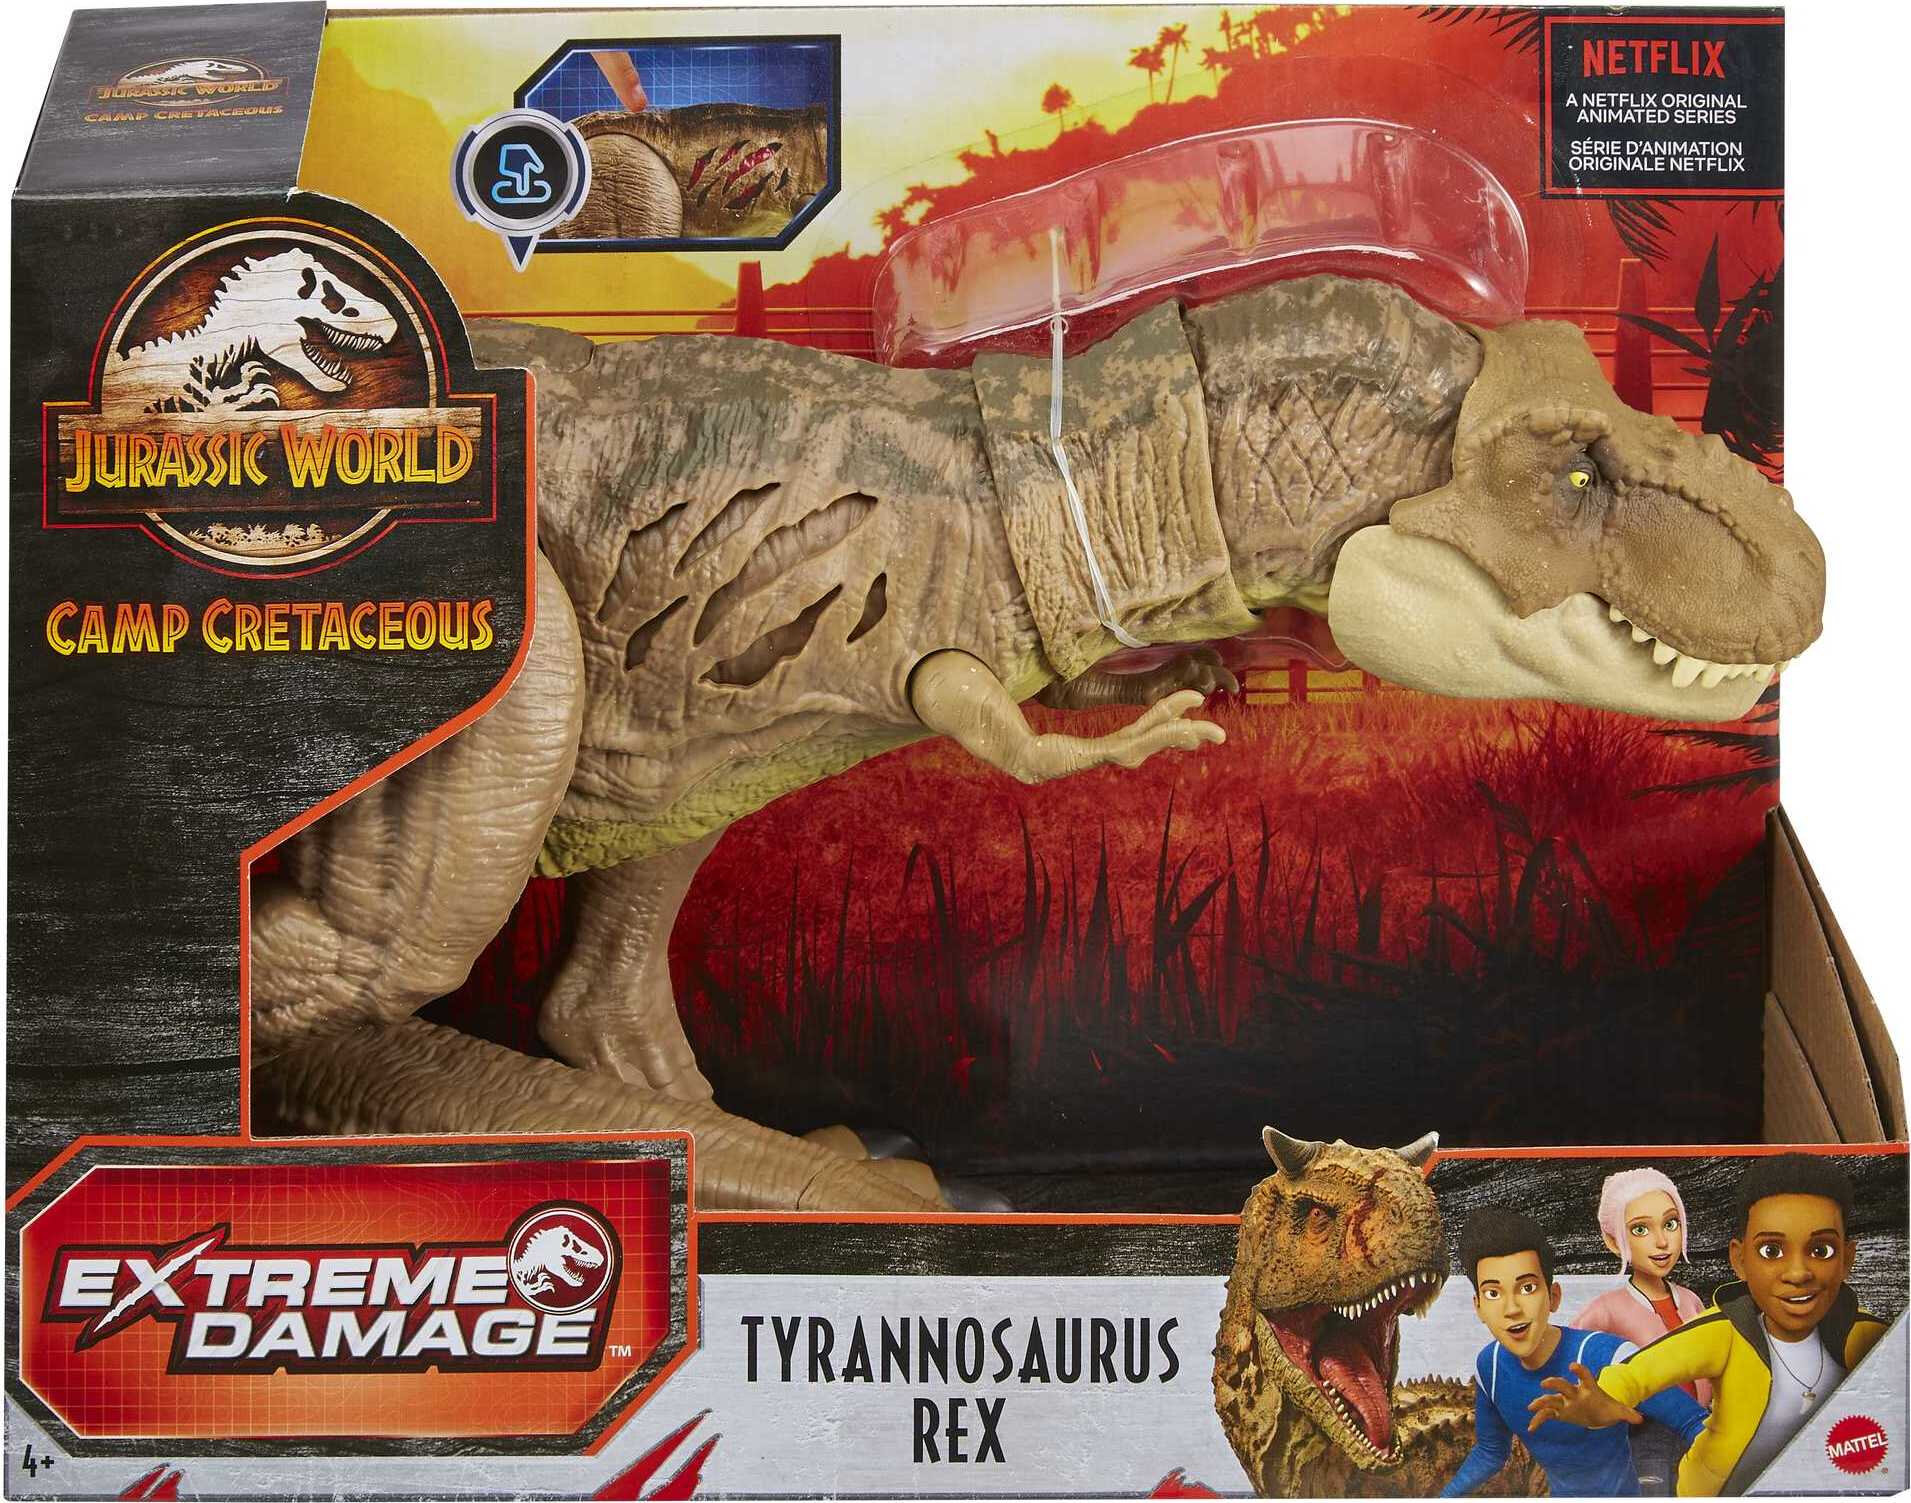 Jurassic World Extreme Damage Tyrannosaurus Rex Action Figure, Transforming Dinosaur Toy with Motion - image 6 of 6